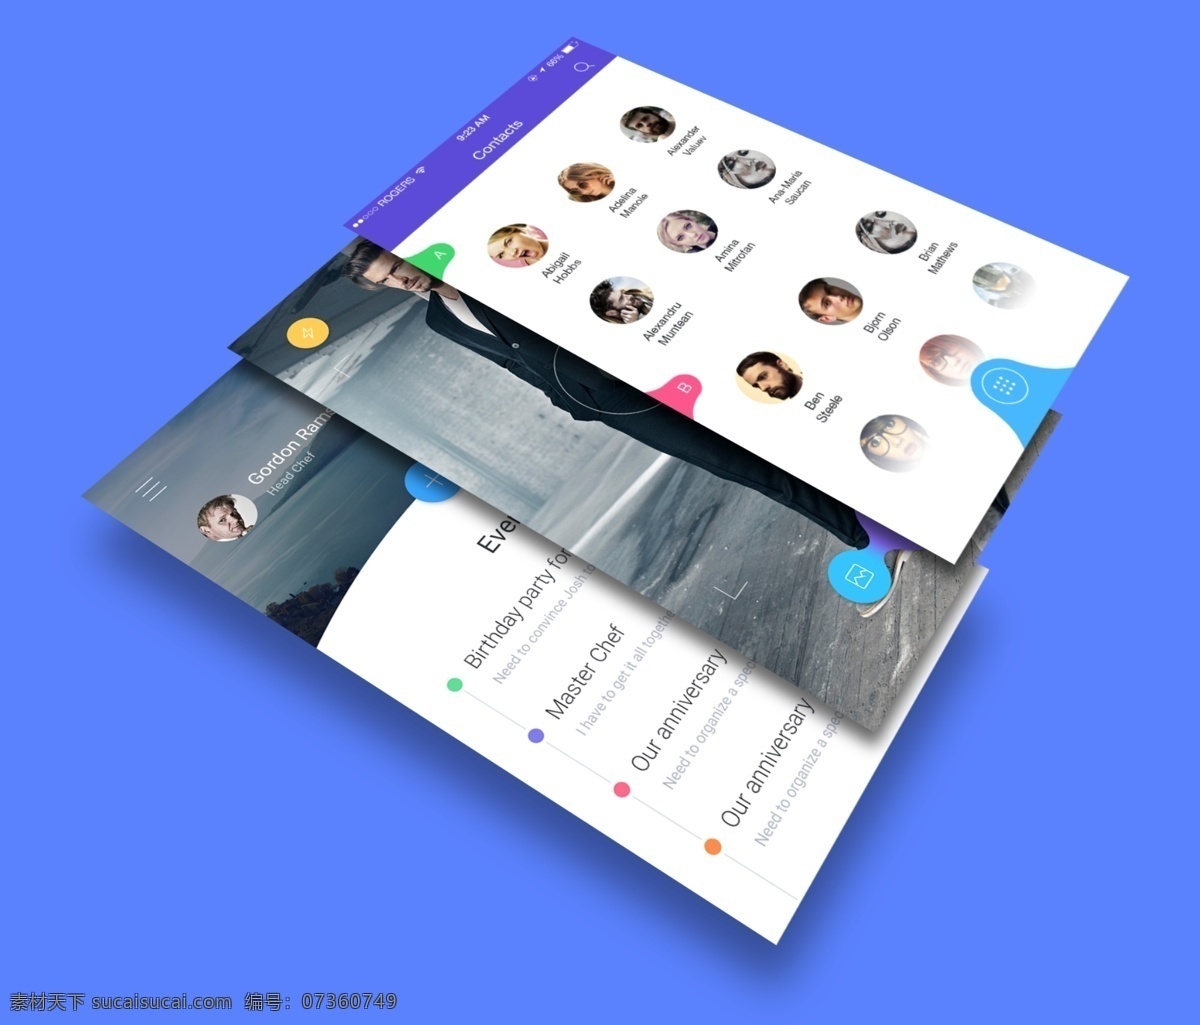 3d 透视 展示 app gui 界面的模板 ui界面 手机界面设计 ui界面设计 蓝色